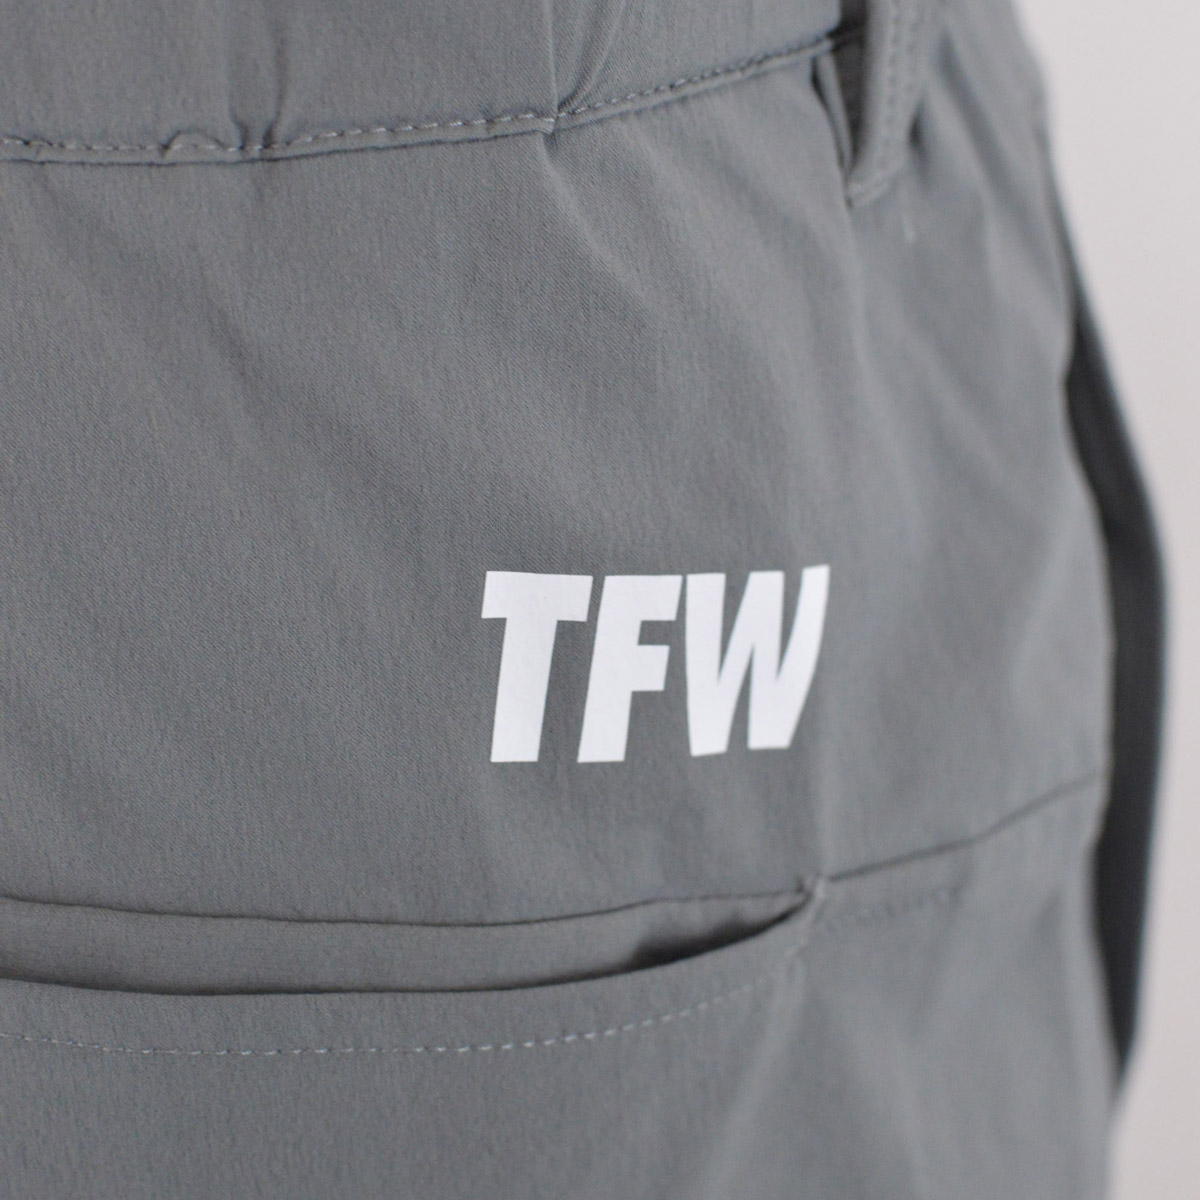 TFW49 ショートパンツ メンズ 春夏用 グレー 黒 グリーン M L LL